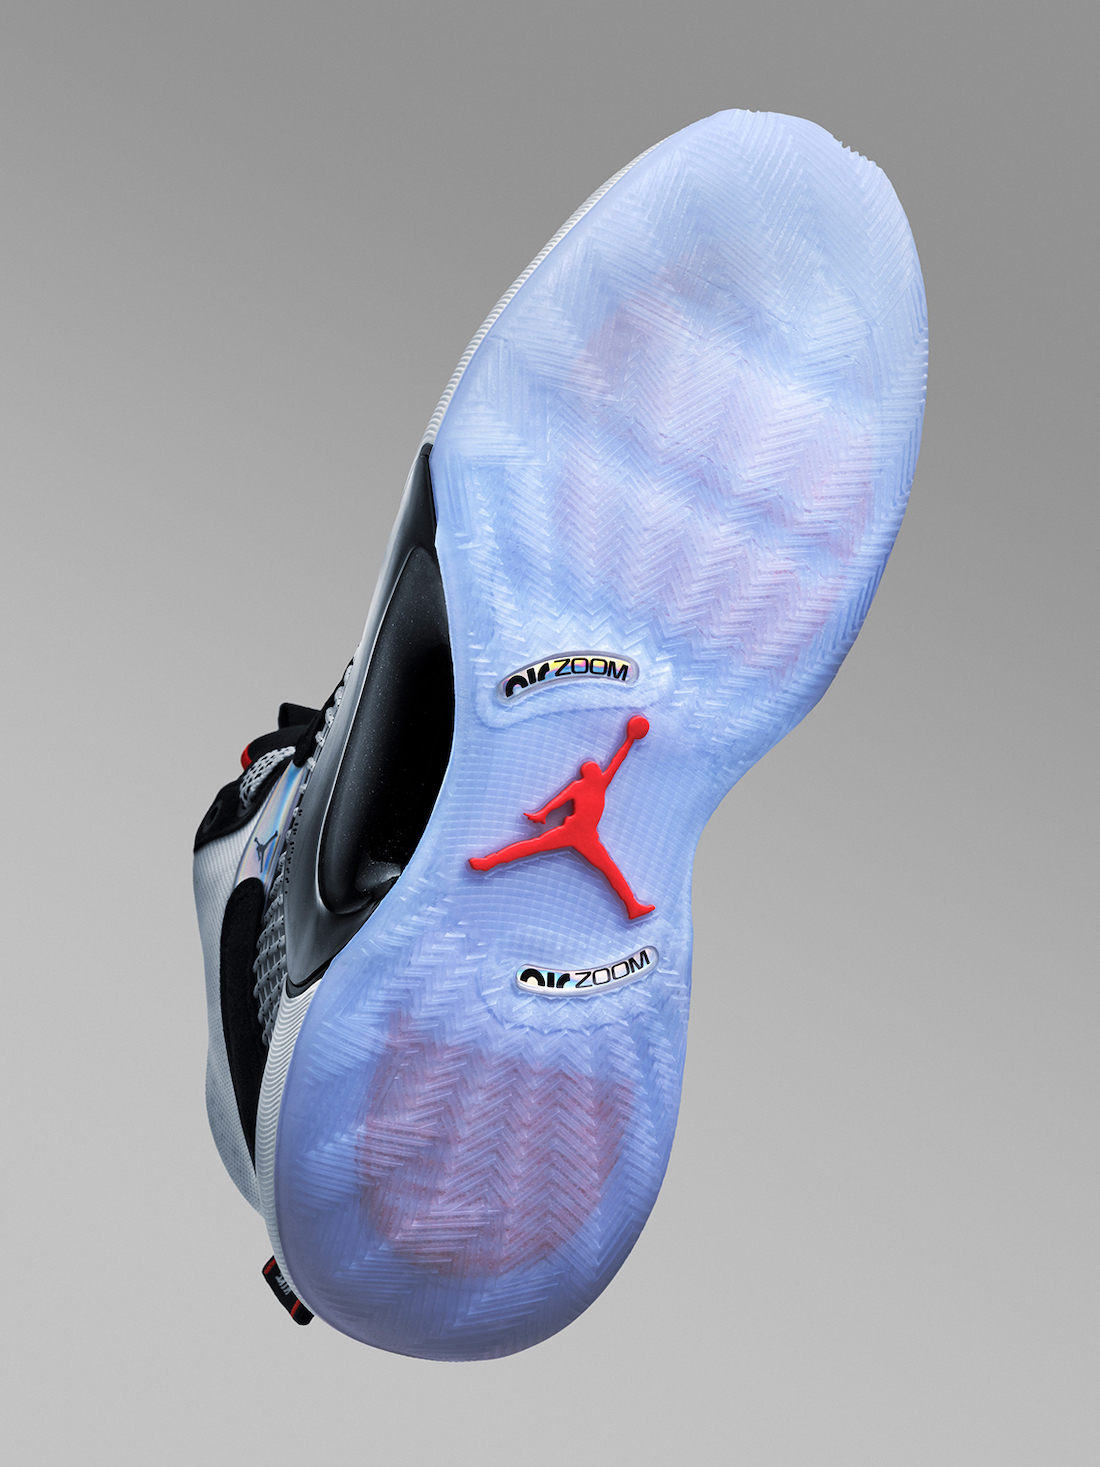 Air Jordan 4 Black And Red With Nike Air On Back Xxxv Release Date Womens Black Hyperdunks 8 5 Ebay Ietpshops